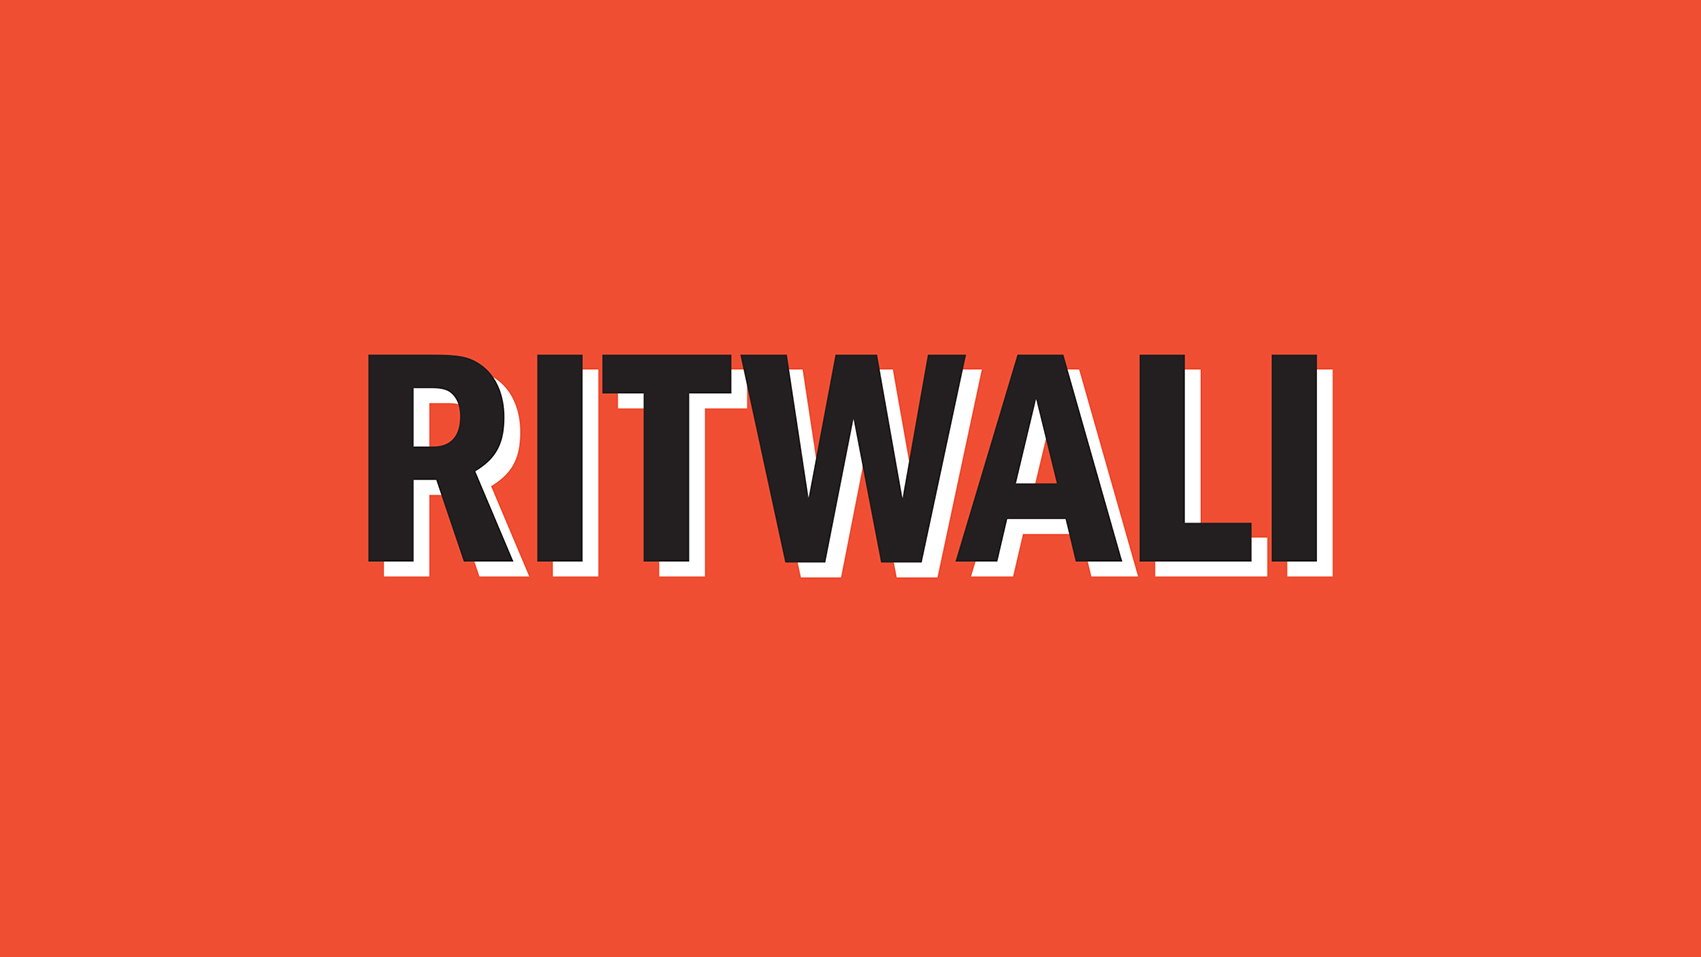 Ritwali branding & logo design by Alexandra Pace Studio